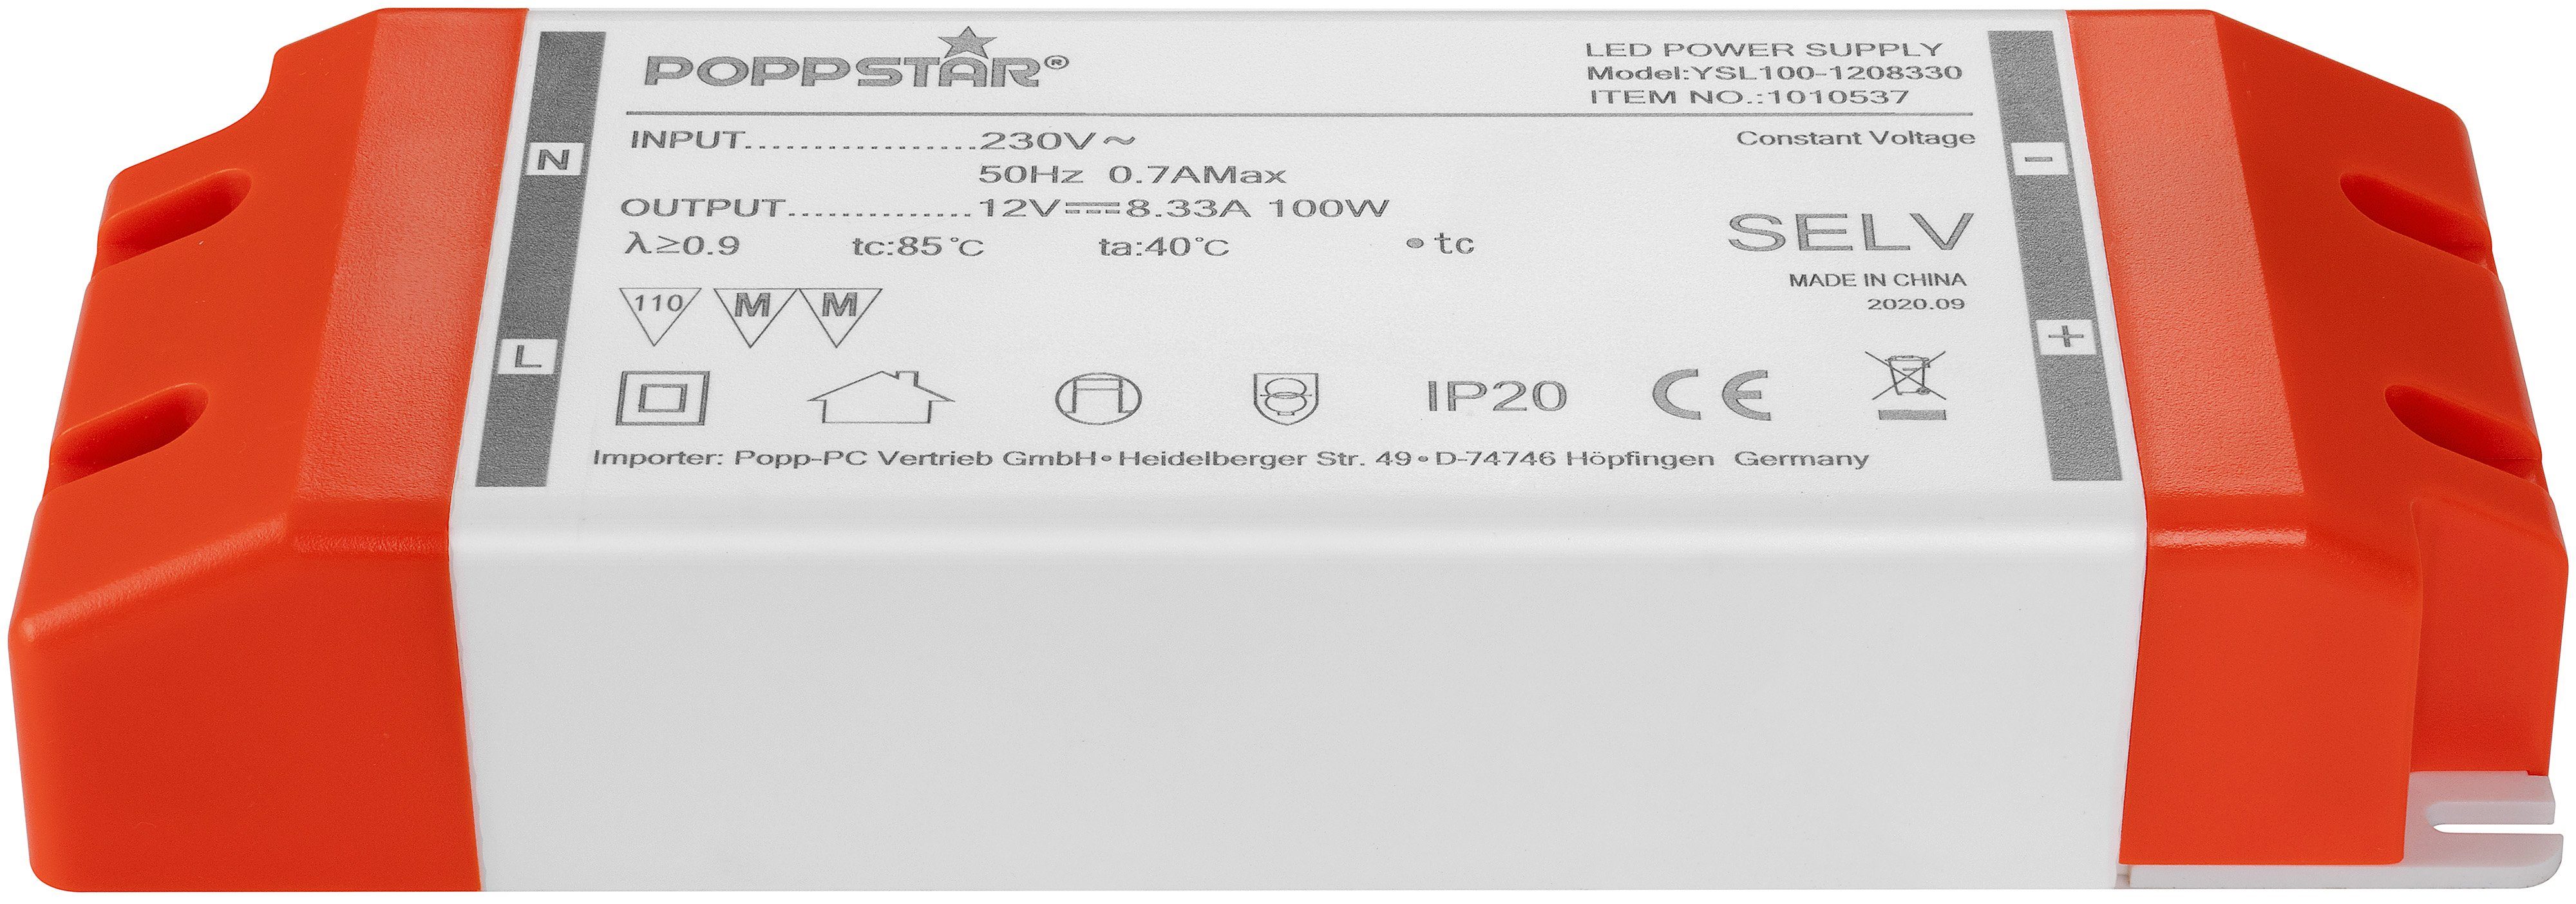 Poppstar LED Transformator 1W 12V AC 100 / 8,33A (12V DC Watt LEDs) Trafo für LED bis 230V Trafo